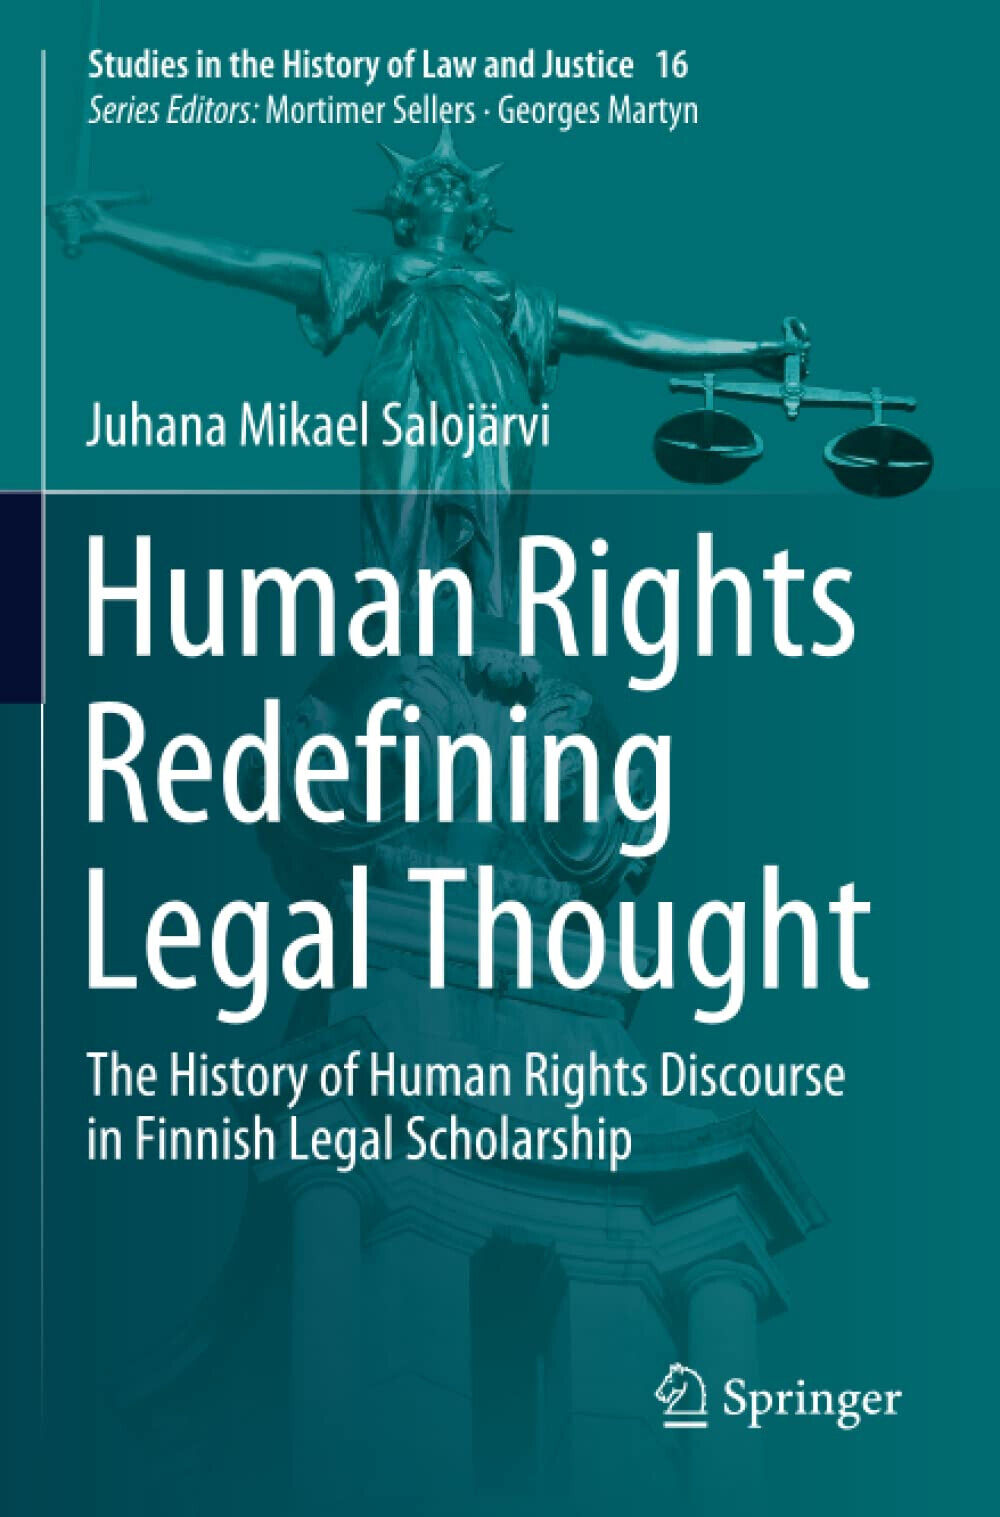 Human Rights Redefining Legal Thought - Juhana Mikael Saloj?rvi - Springer, 2020